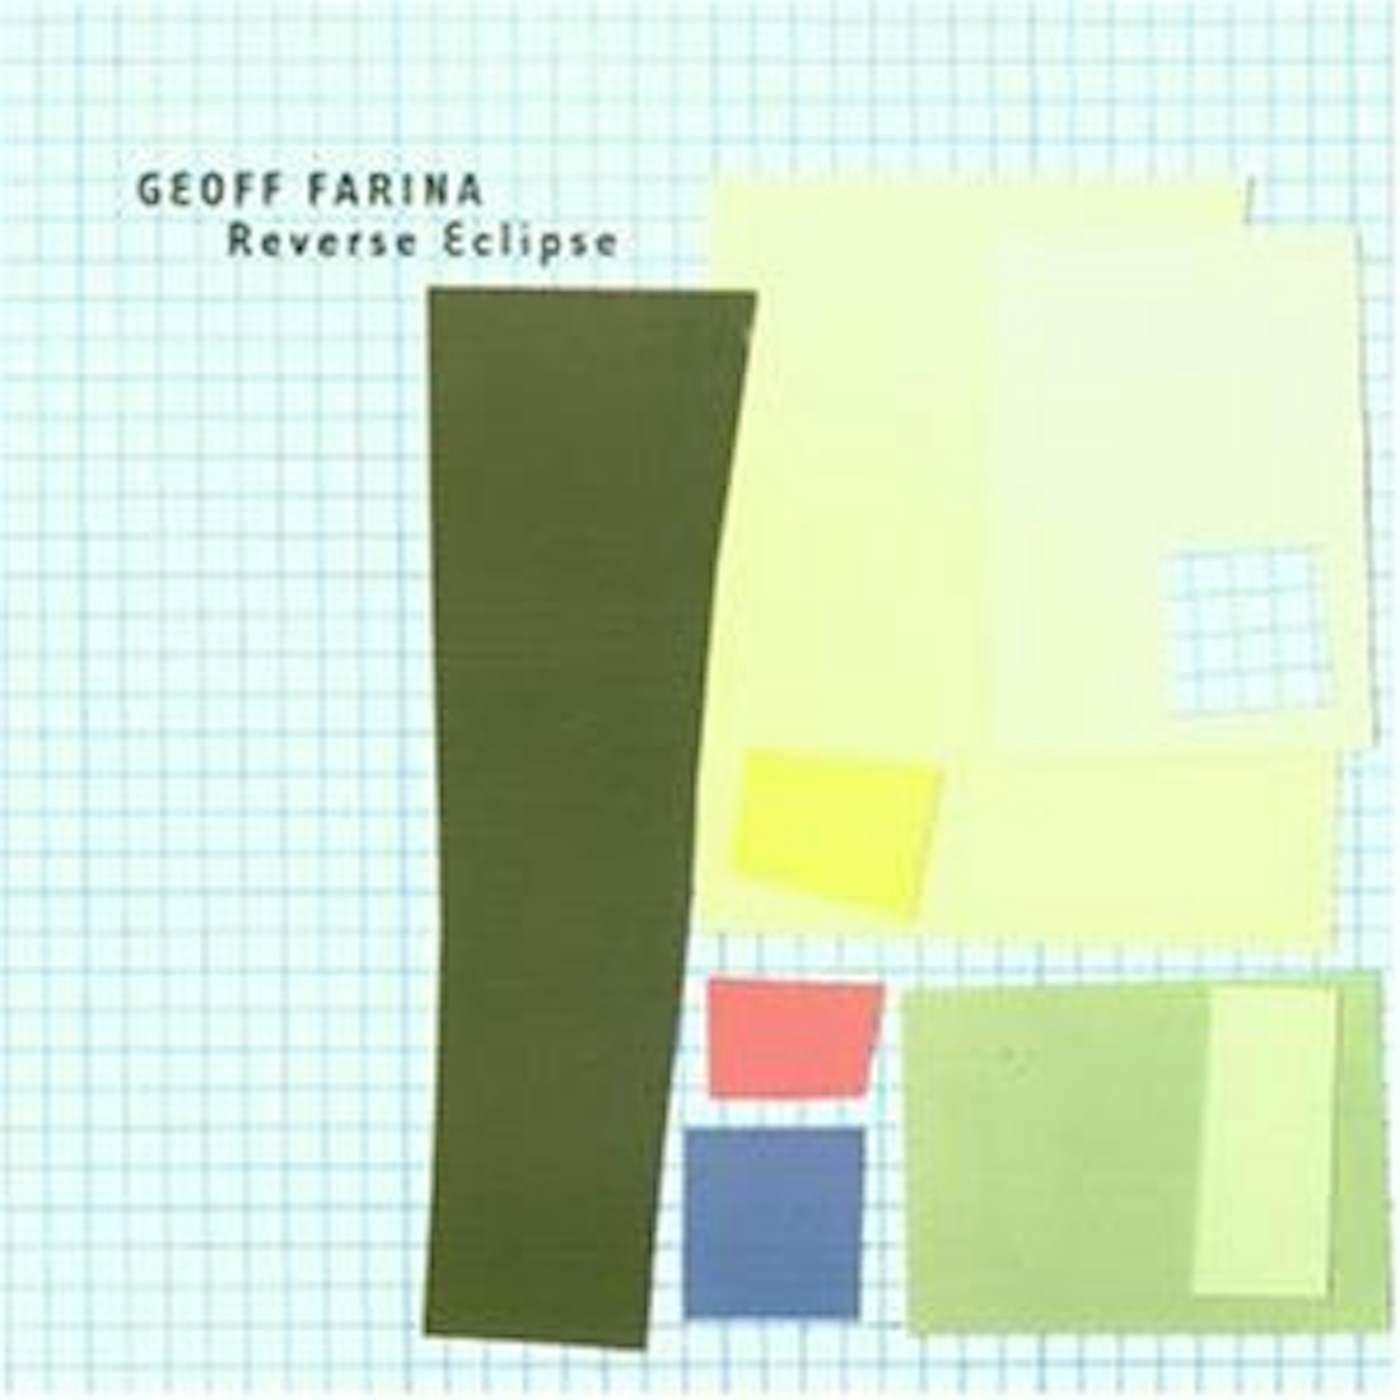 Geoff Farina REVERSE ECLIPSE CD